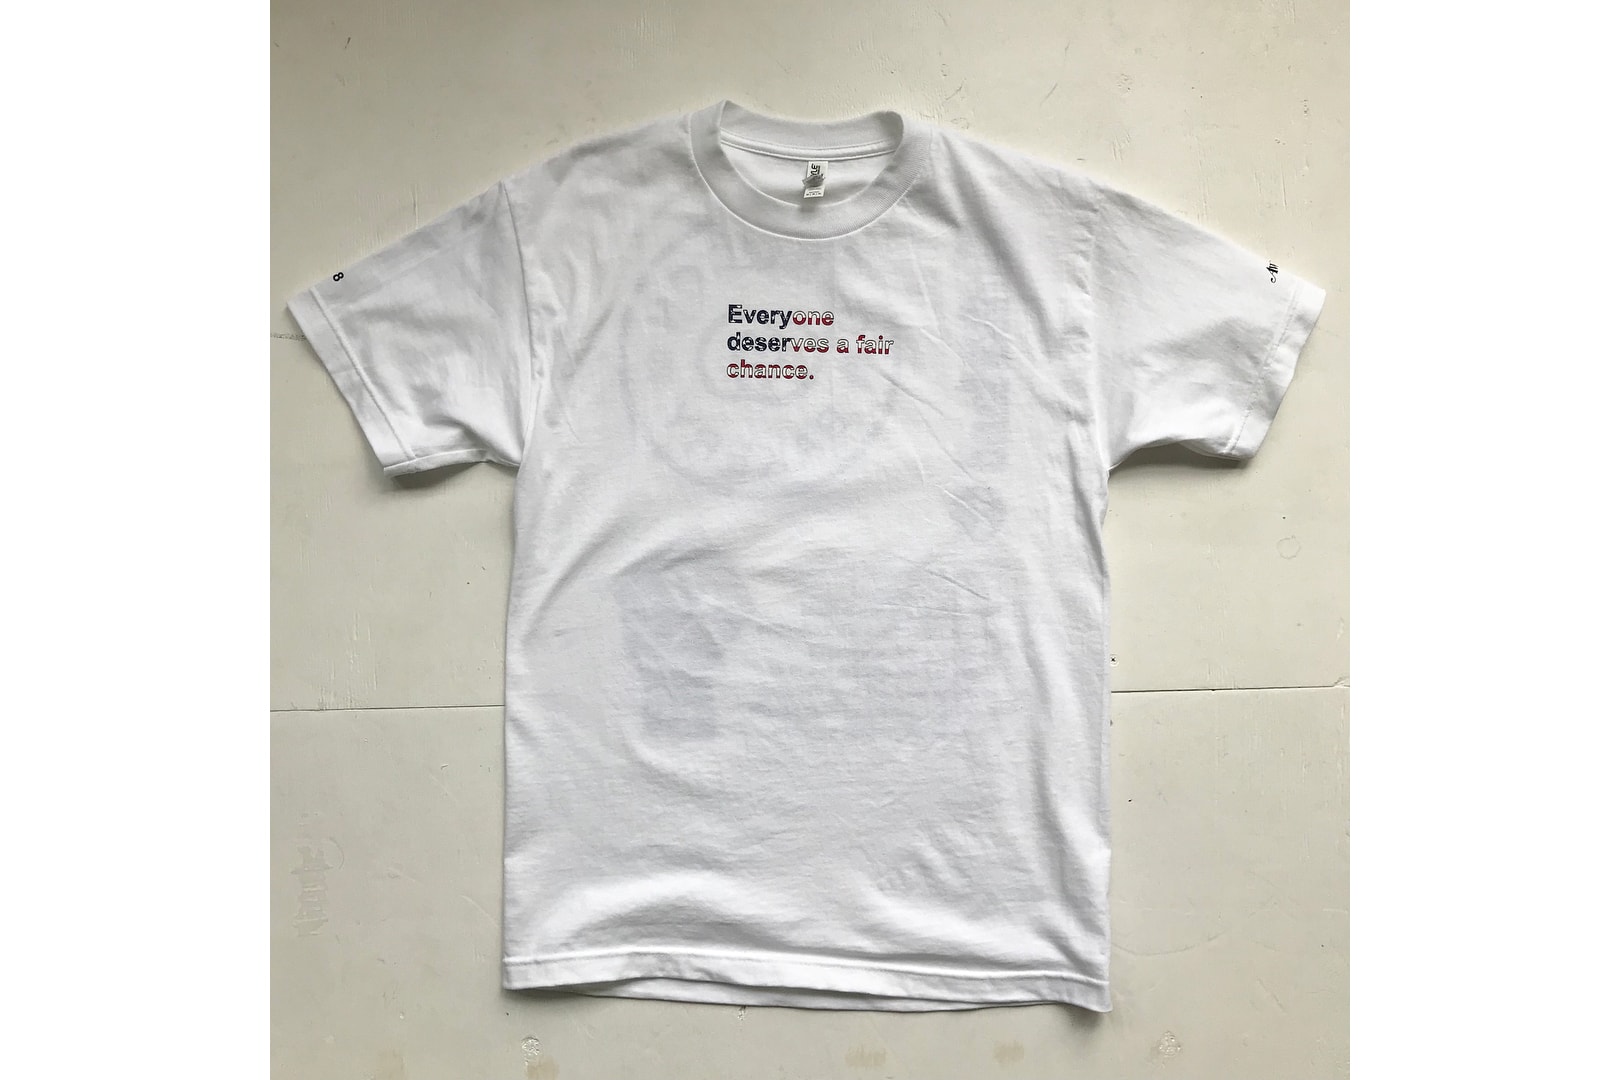 Awake NY Timberland Greyston Bakery 9 11 T-Shirt 2018 Foundation September 11